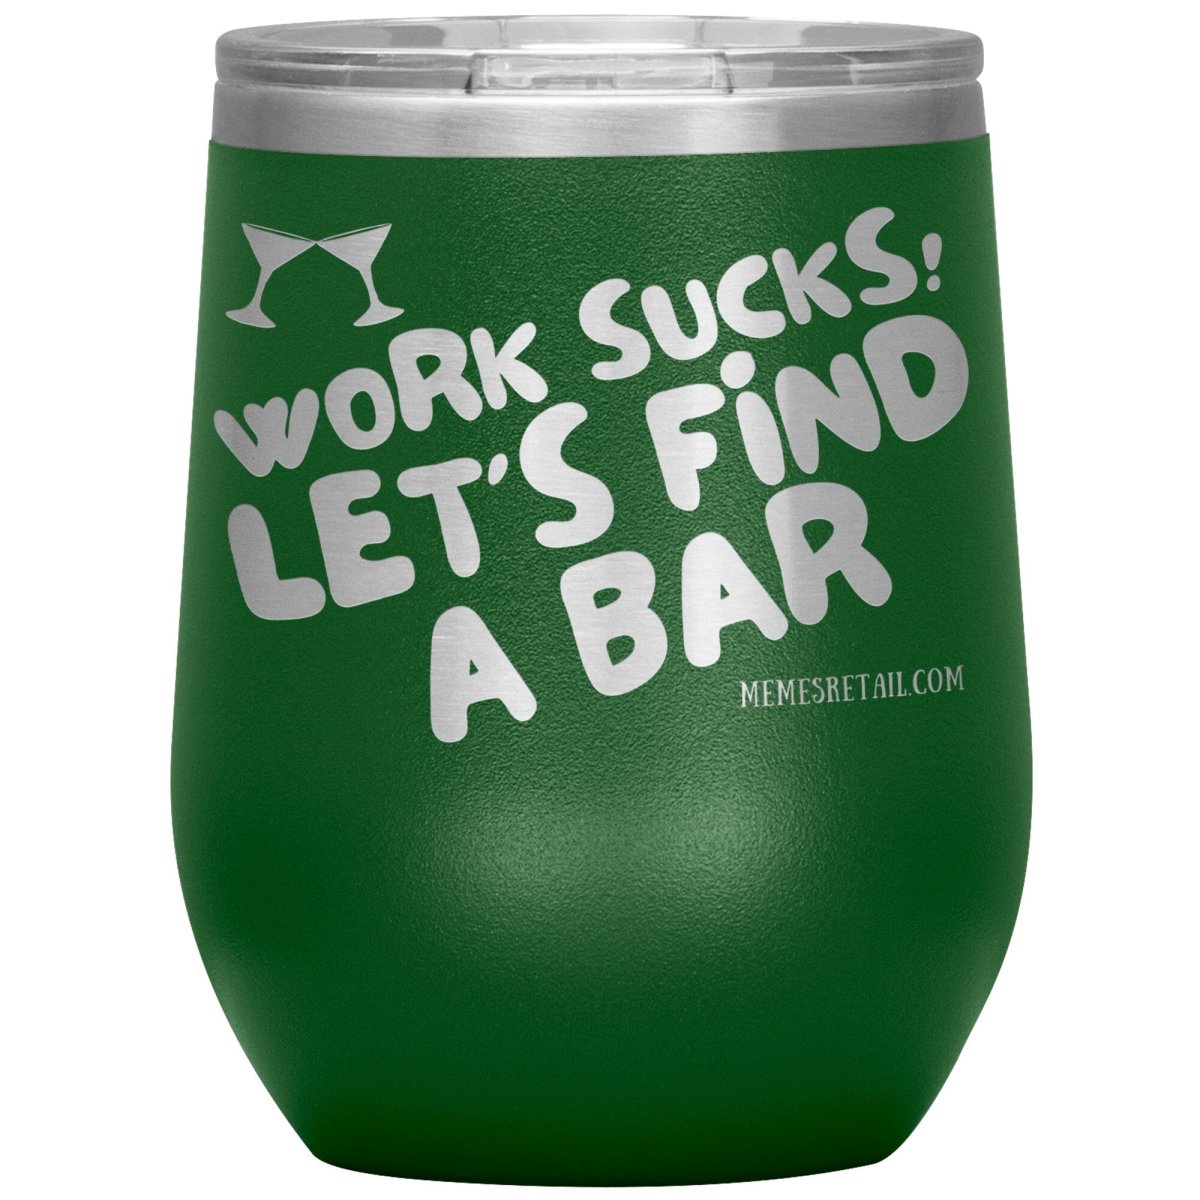 Work Sucks! Let's Find A Bar Tumblers, 12oz Wine Insulated Tumbler / Green - MemesRetail.com